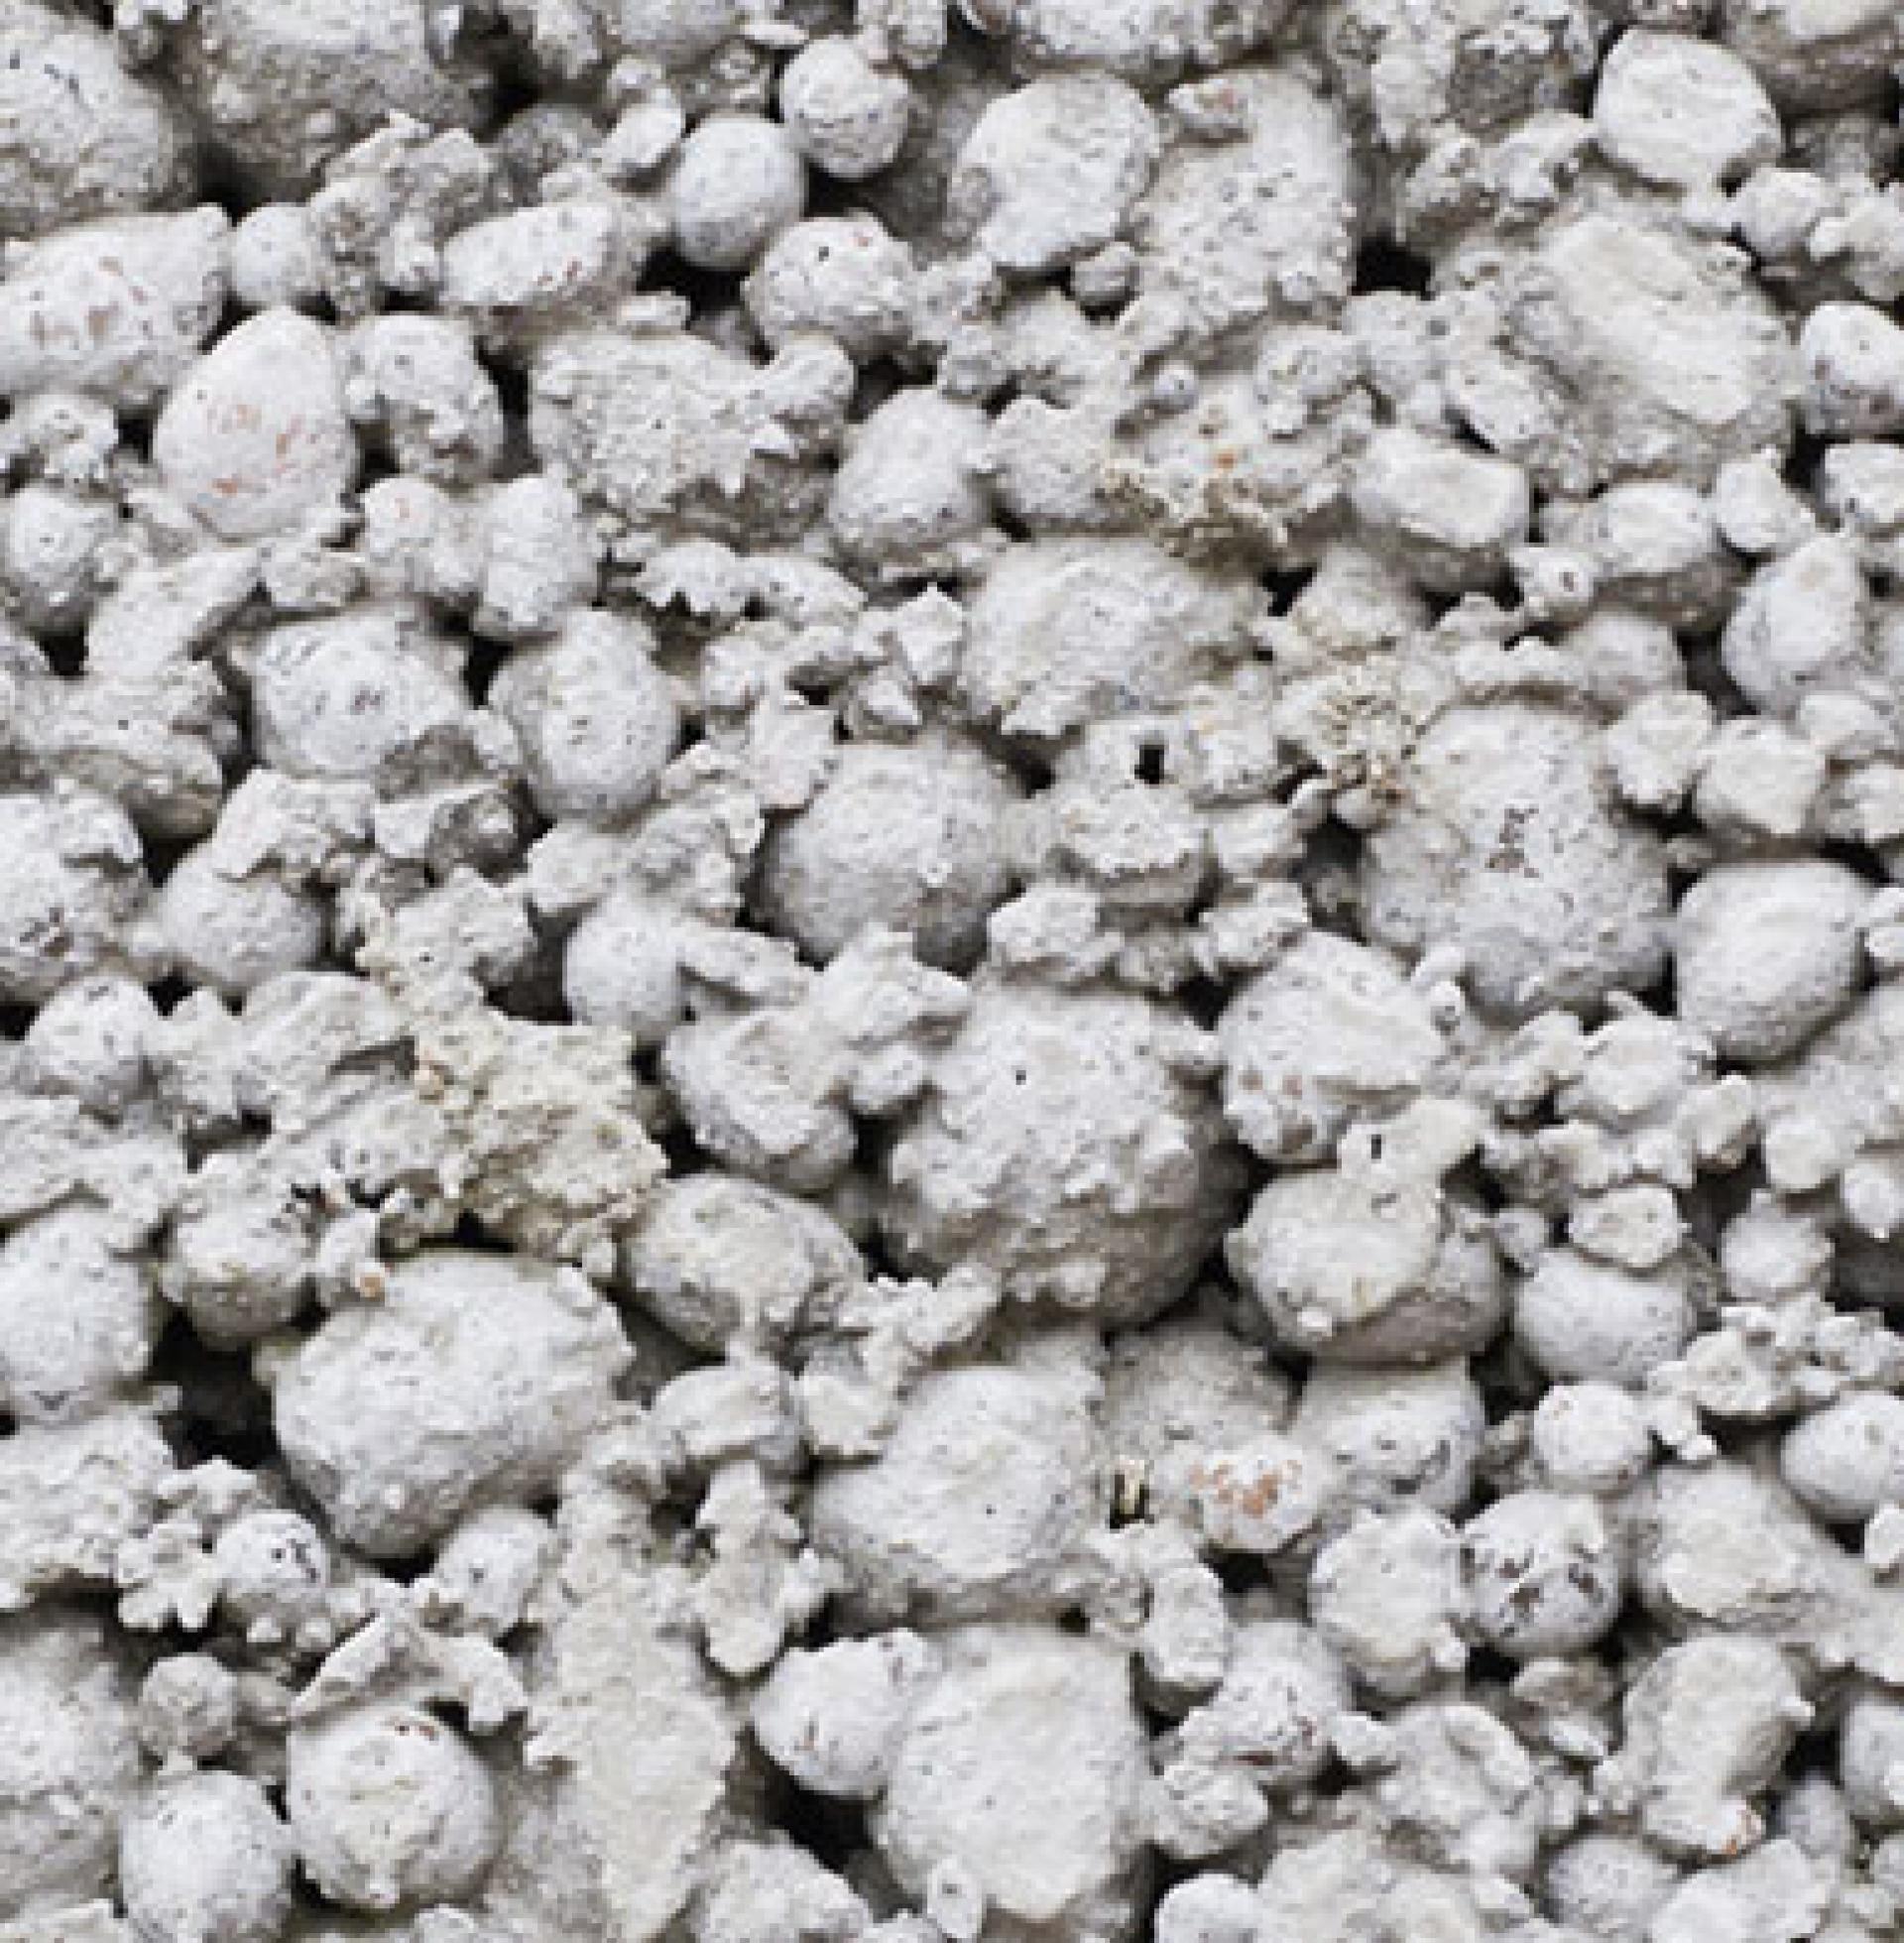 image of hygrogrete concrete